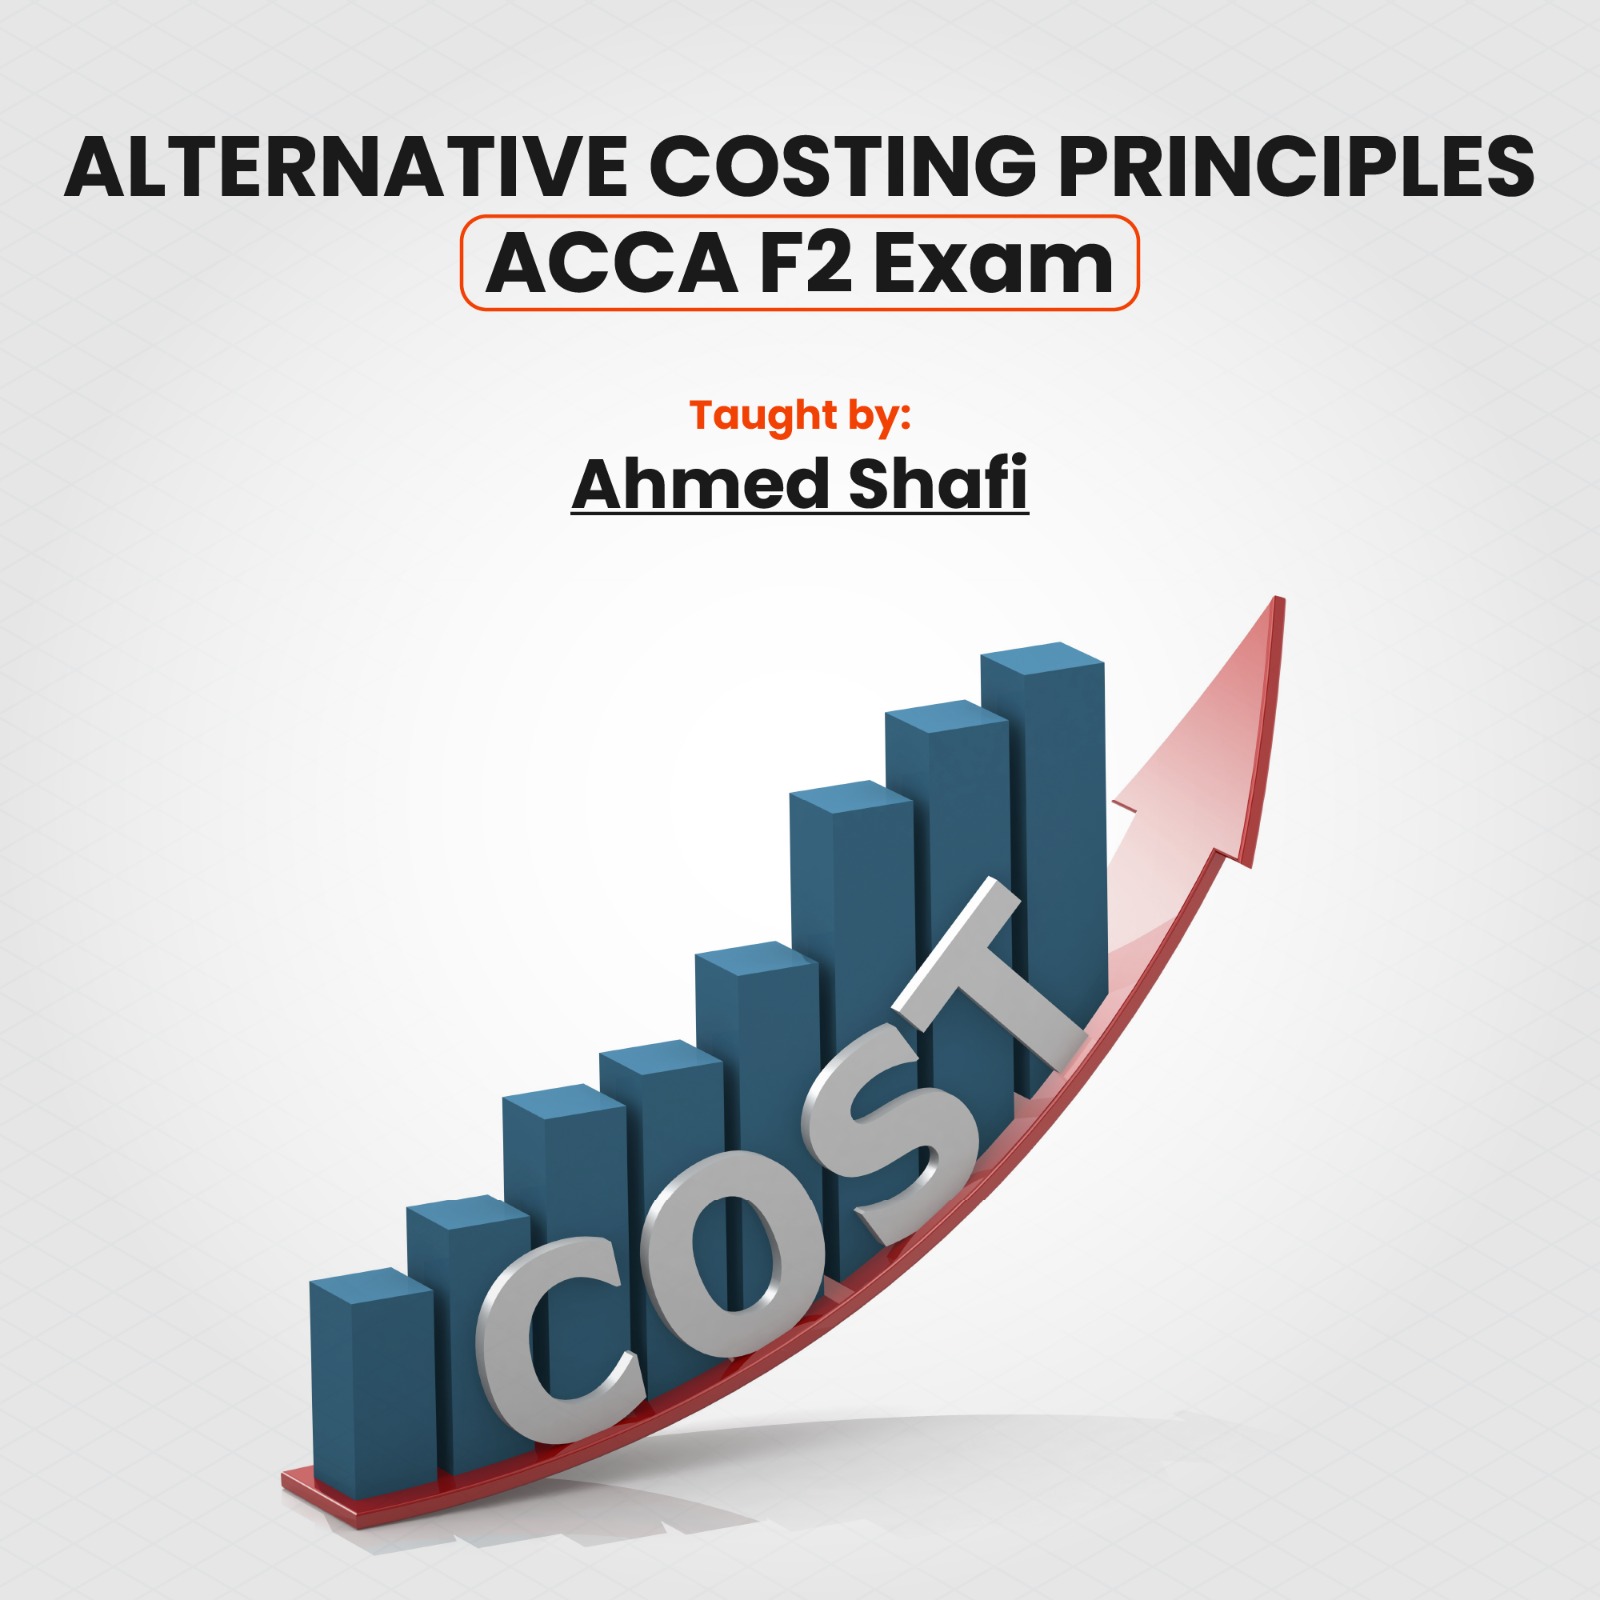 “ACCA F2 Exam: Exploring Alternative Costing Principles”